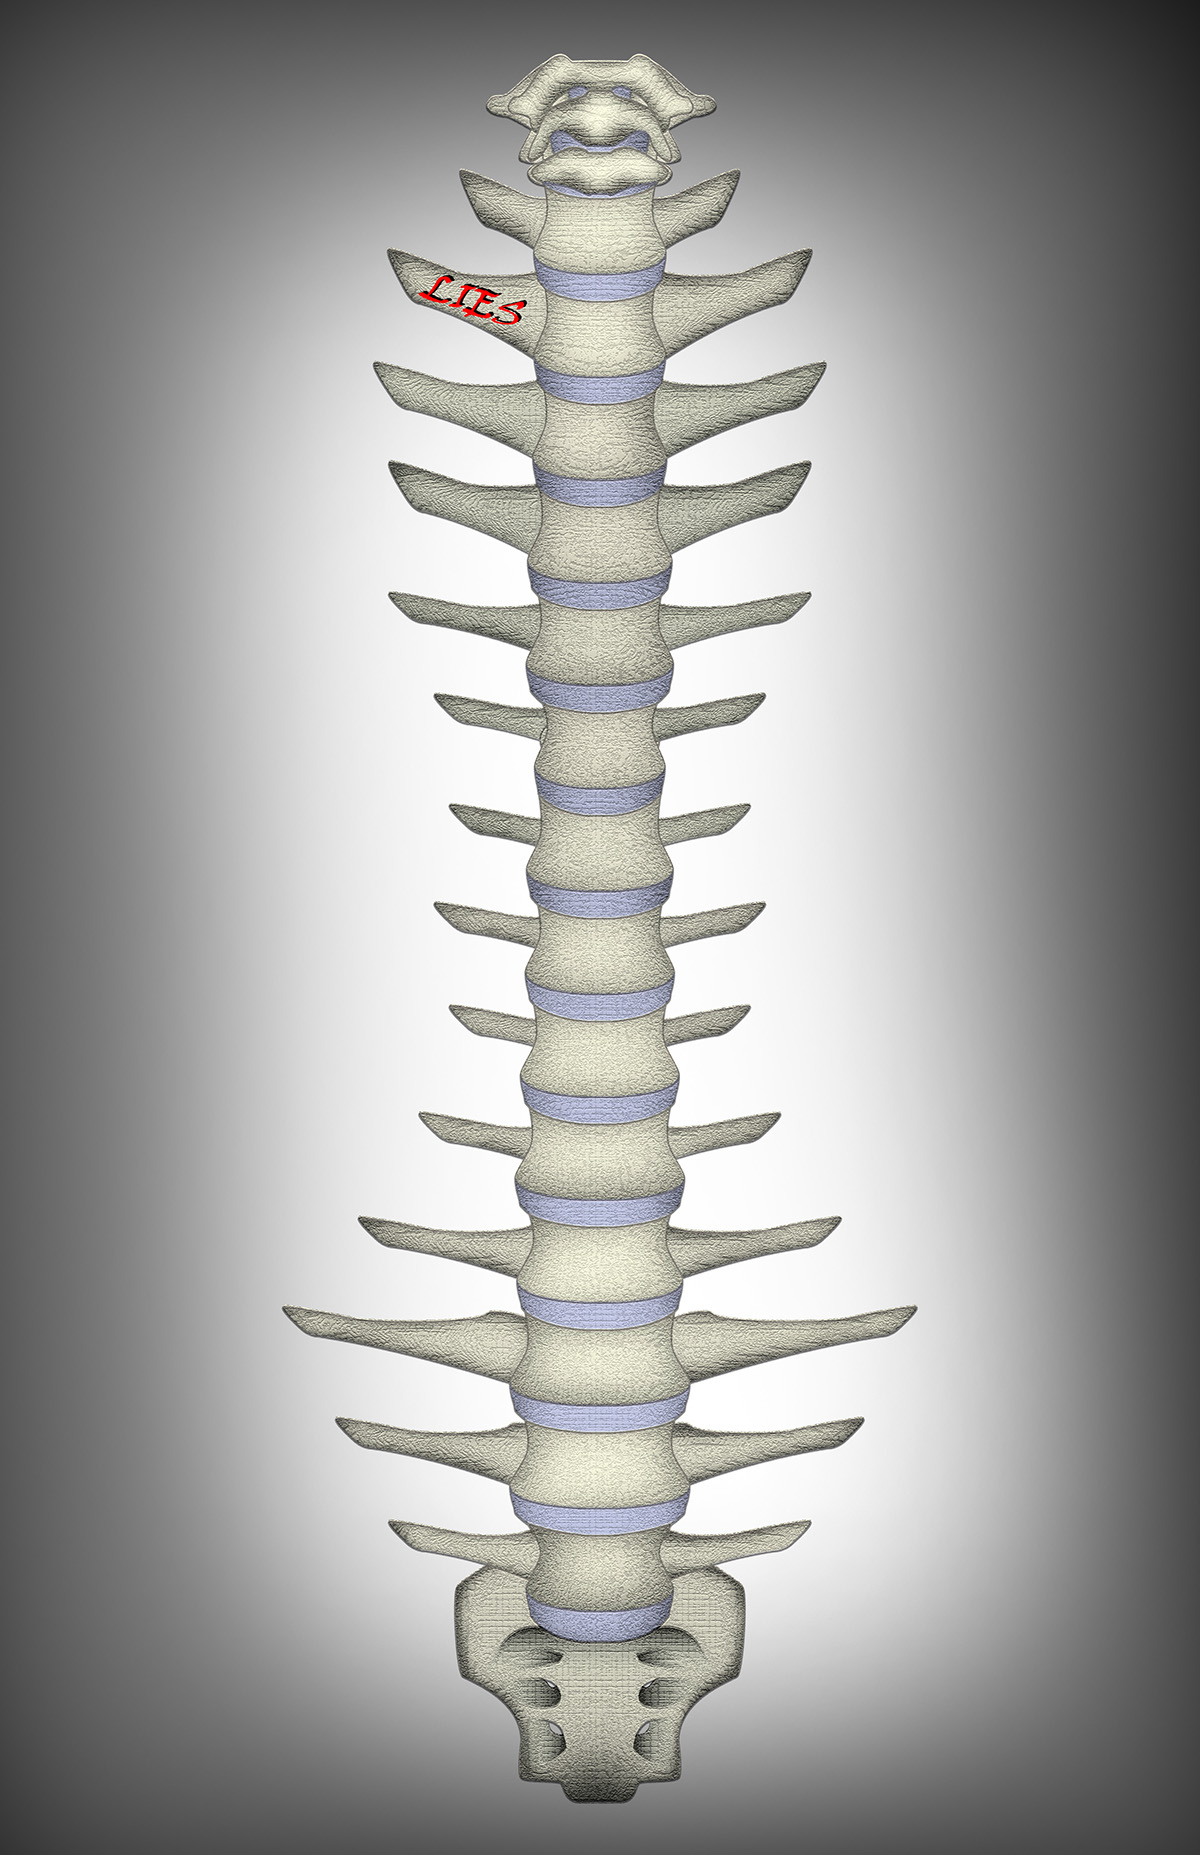 Backbone Comprisal backbone comprisal spine spinal cord vertebrae backbones lies